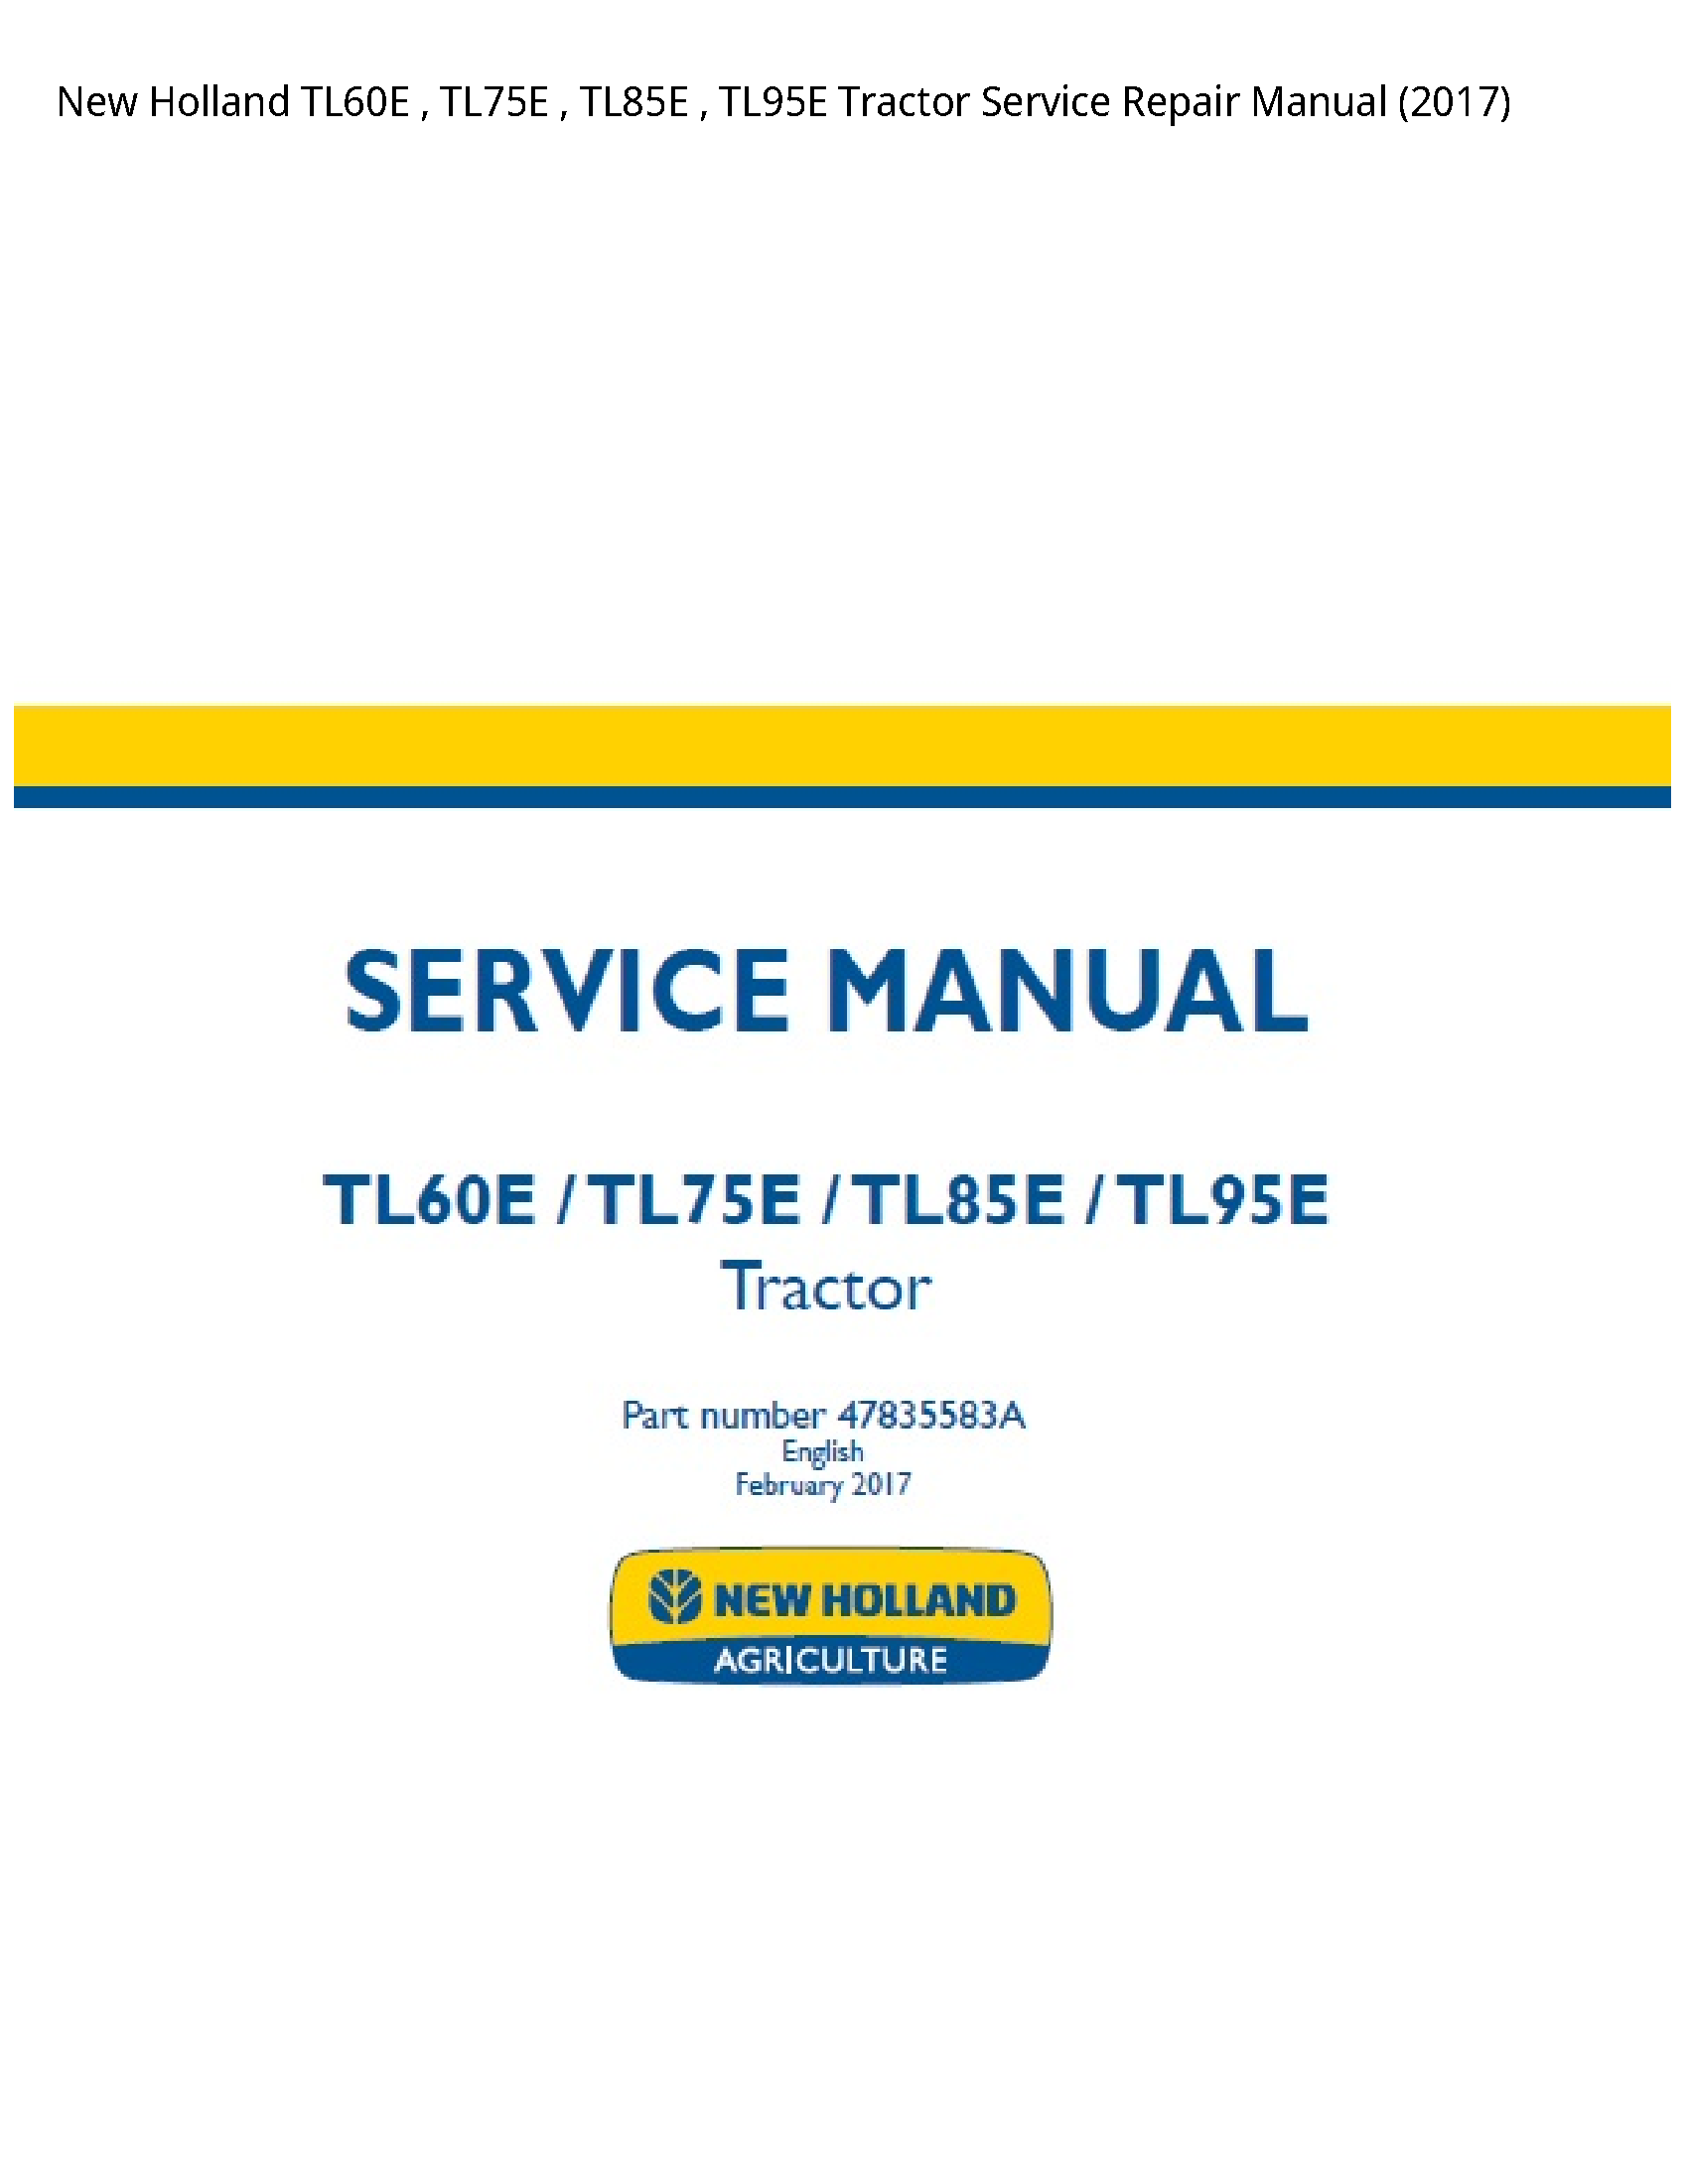 New Holland TL60E Tractor manual